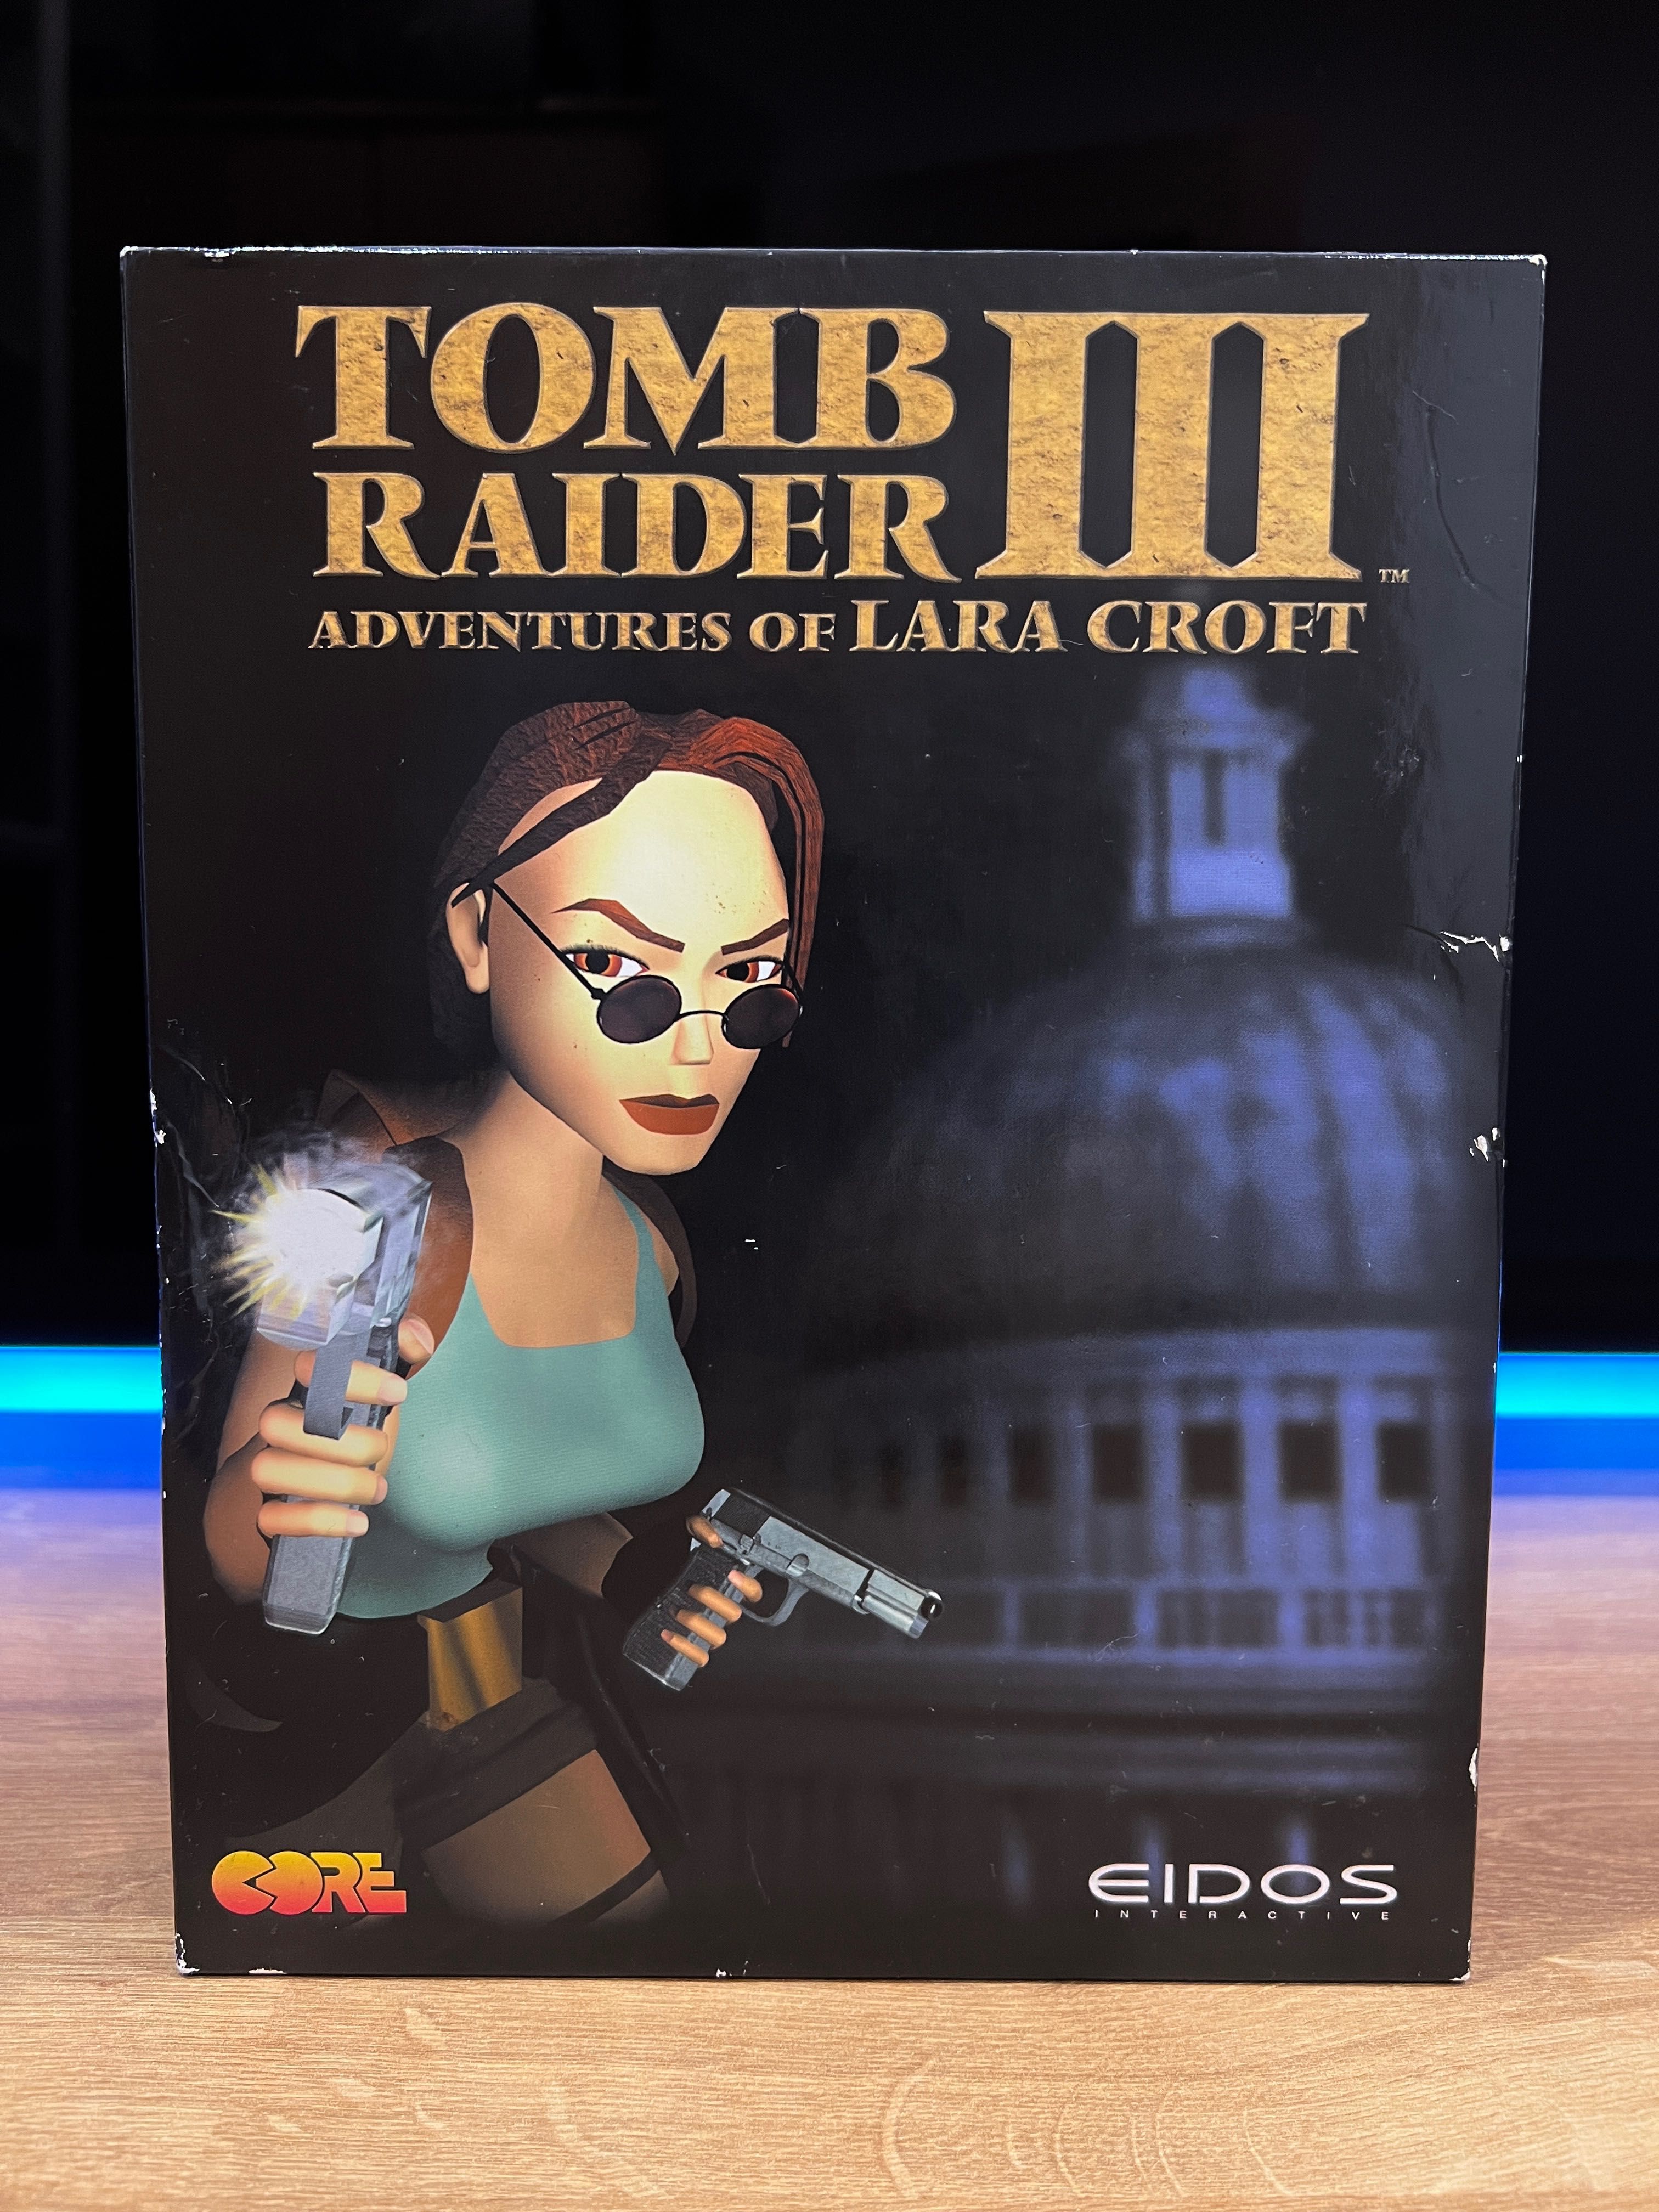 Tomb Raider III 3 (PC EN 1998) BIG BOX premierowe kompletne wydanie